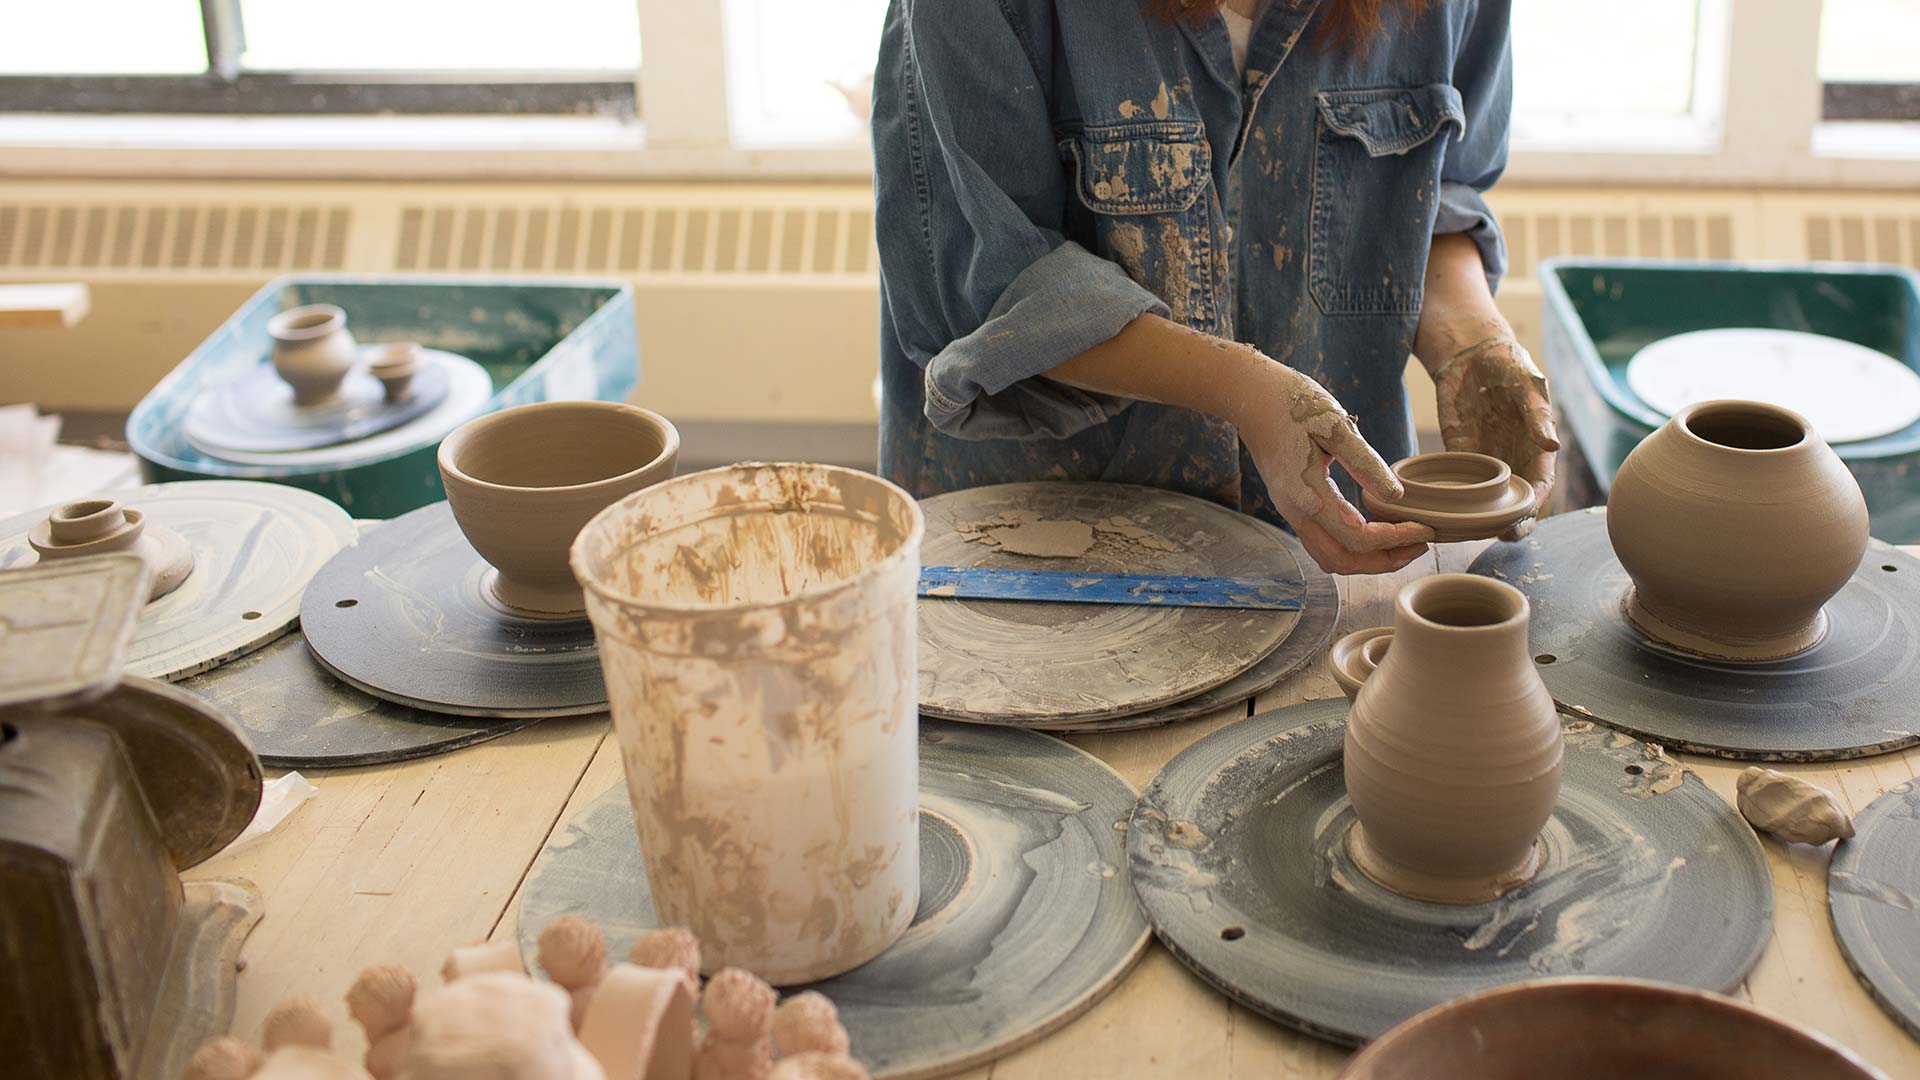 Studio art major student arranging pottery on table.